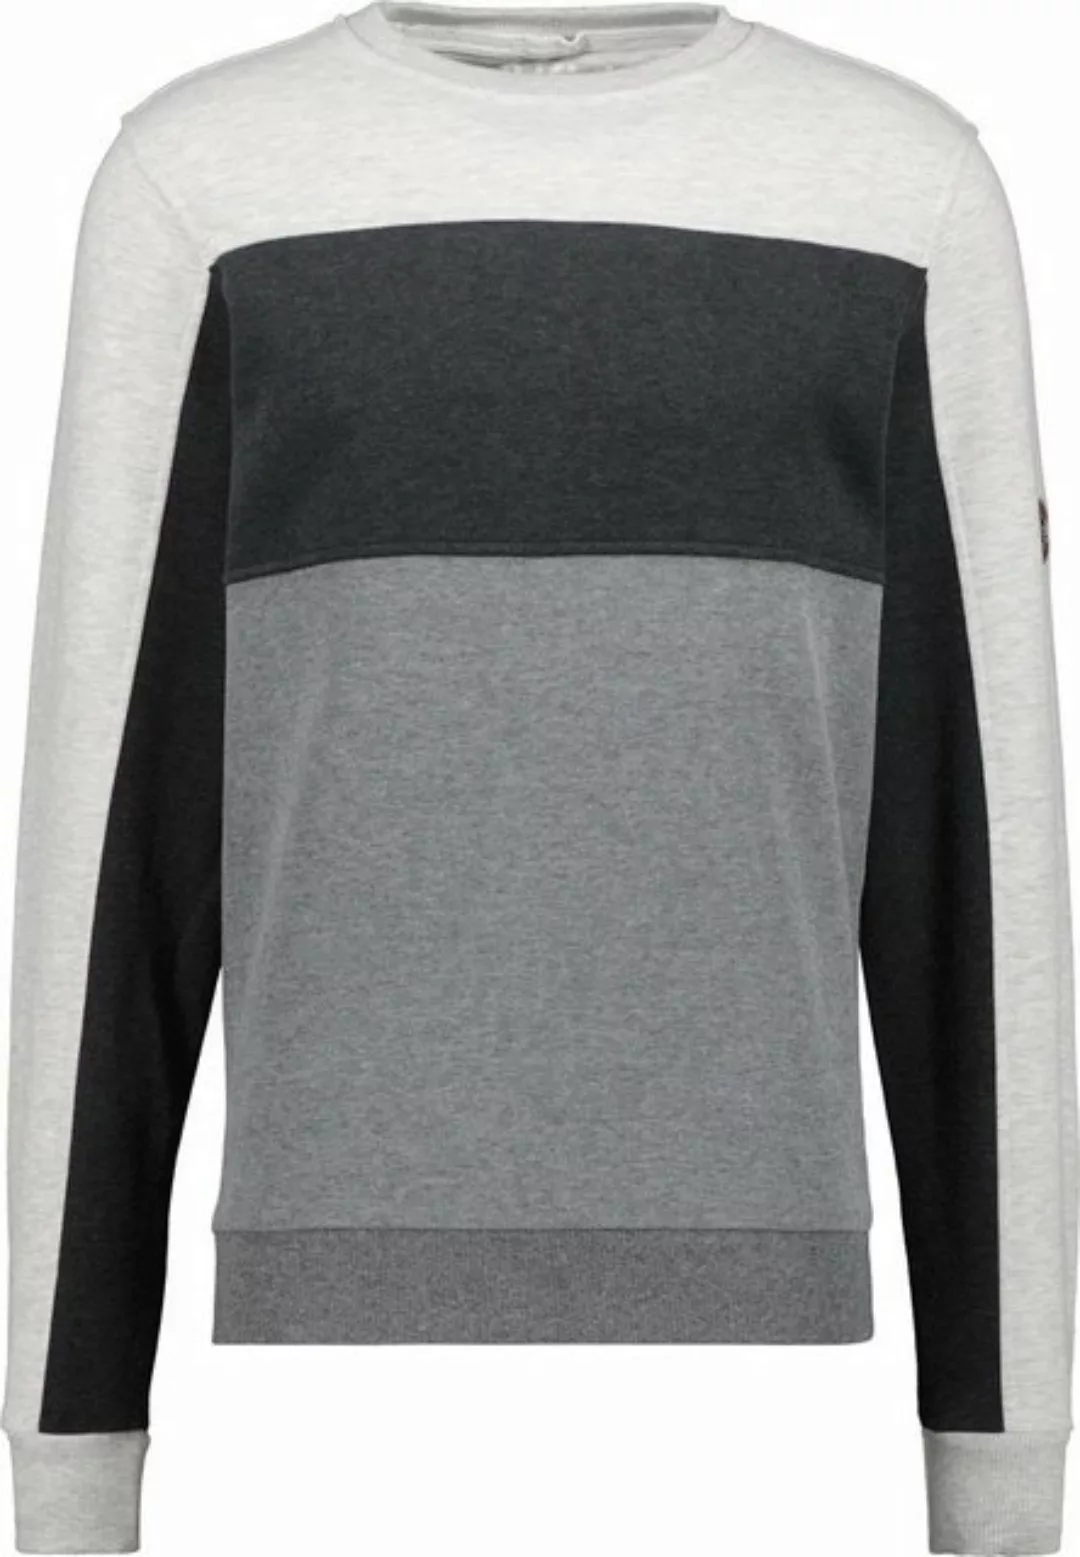 Alife & Kickin Sweatshirt VinceAK A Crewneck Herren Sweatshirt günstig online kaufen